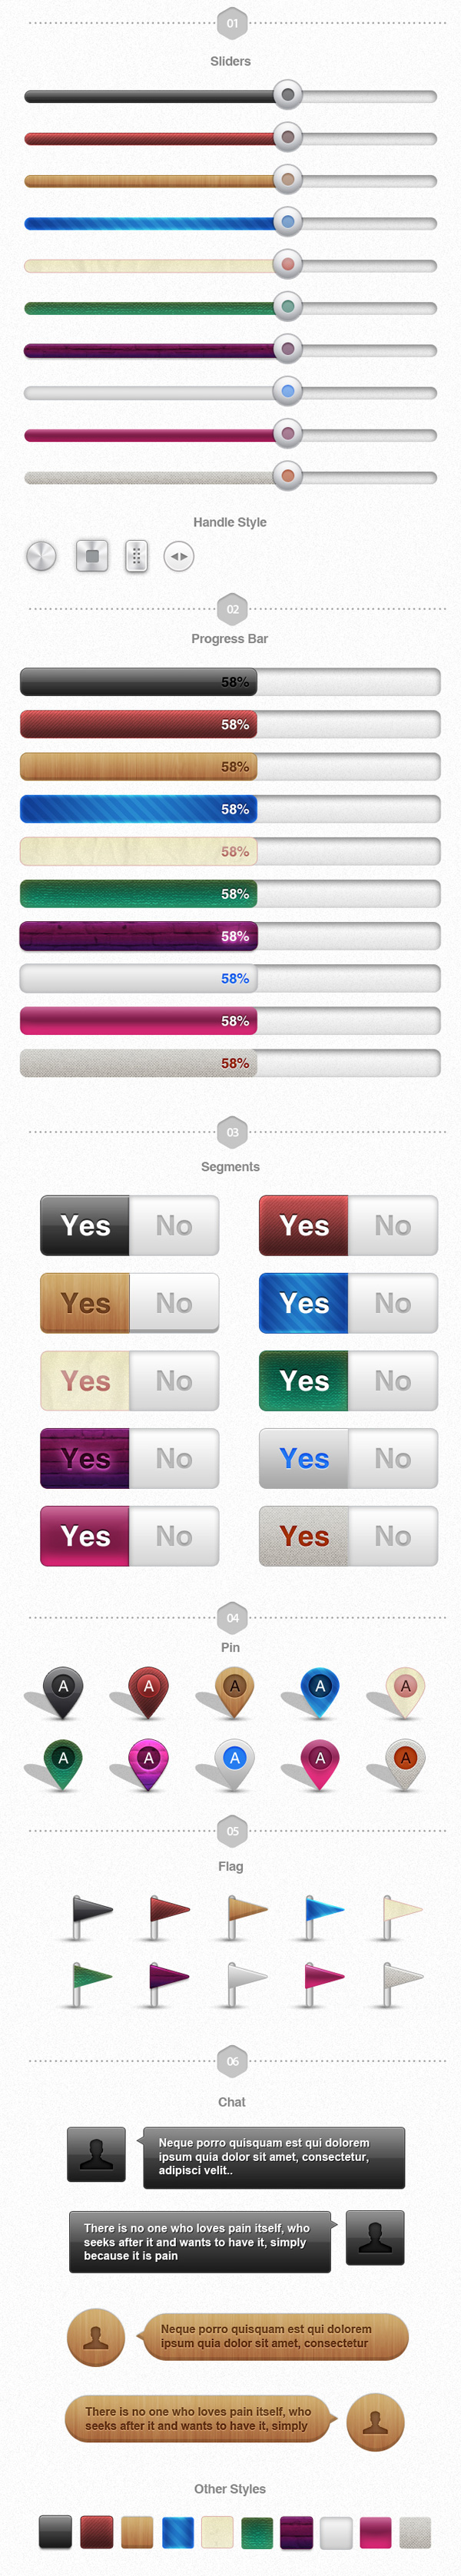 ui kit ui design user Interface GUI ios iphone iPad Retina Display apps navigation buttons color full mobile